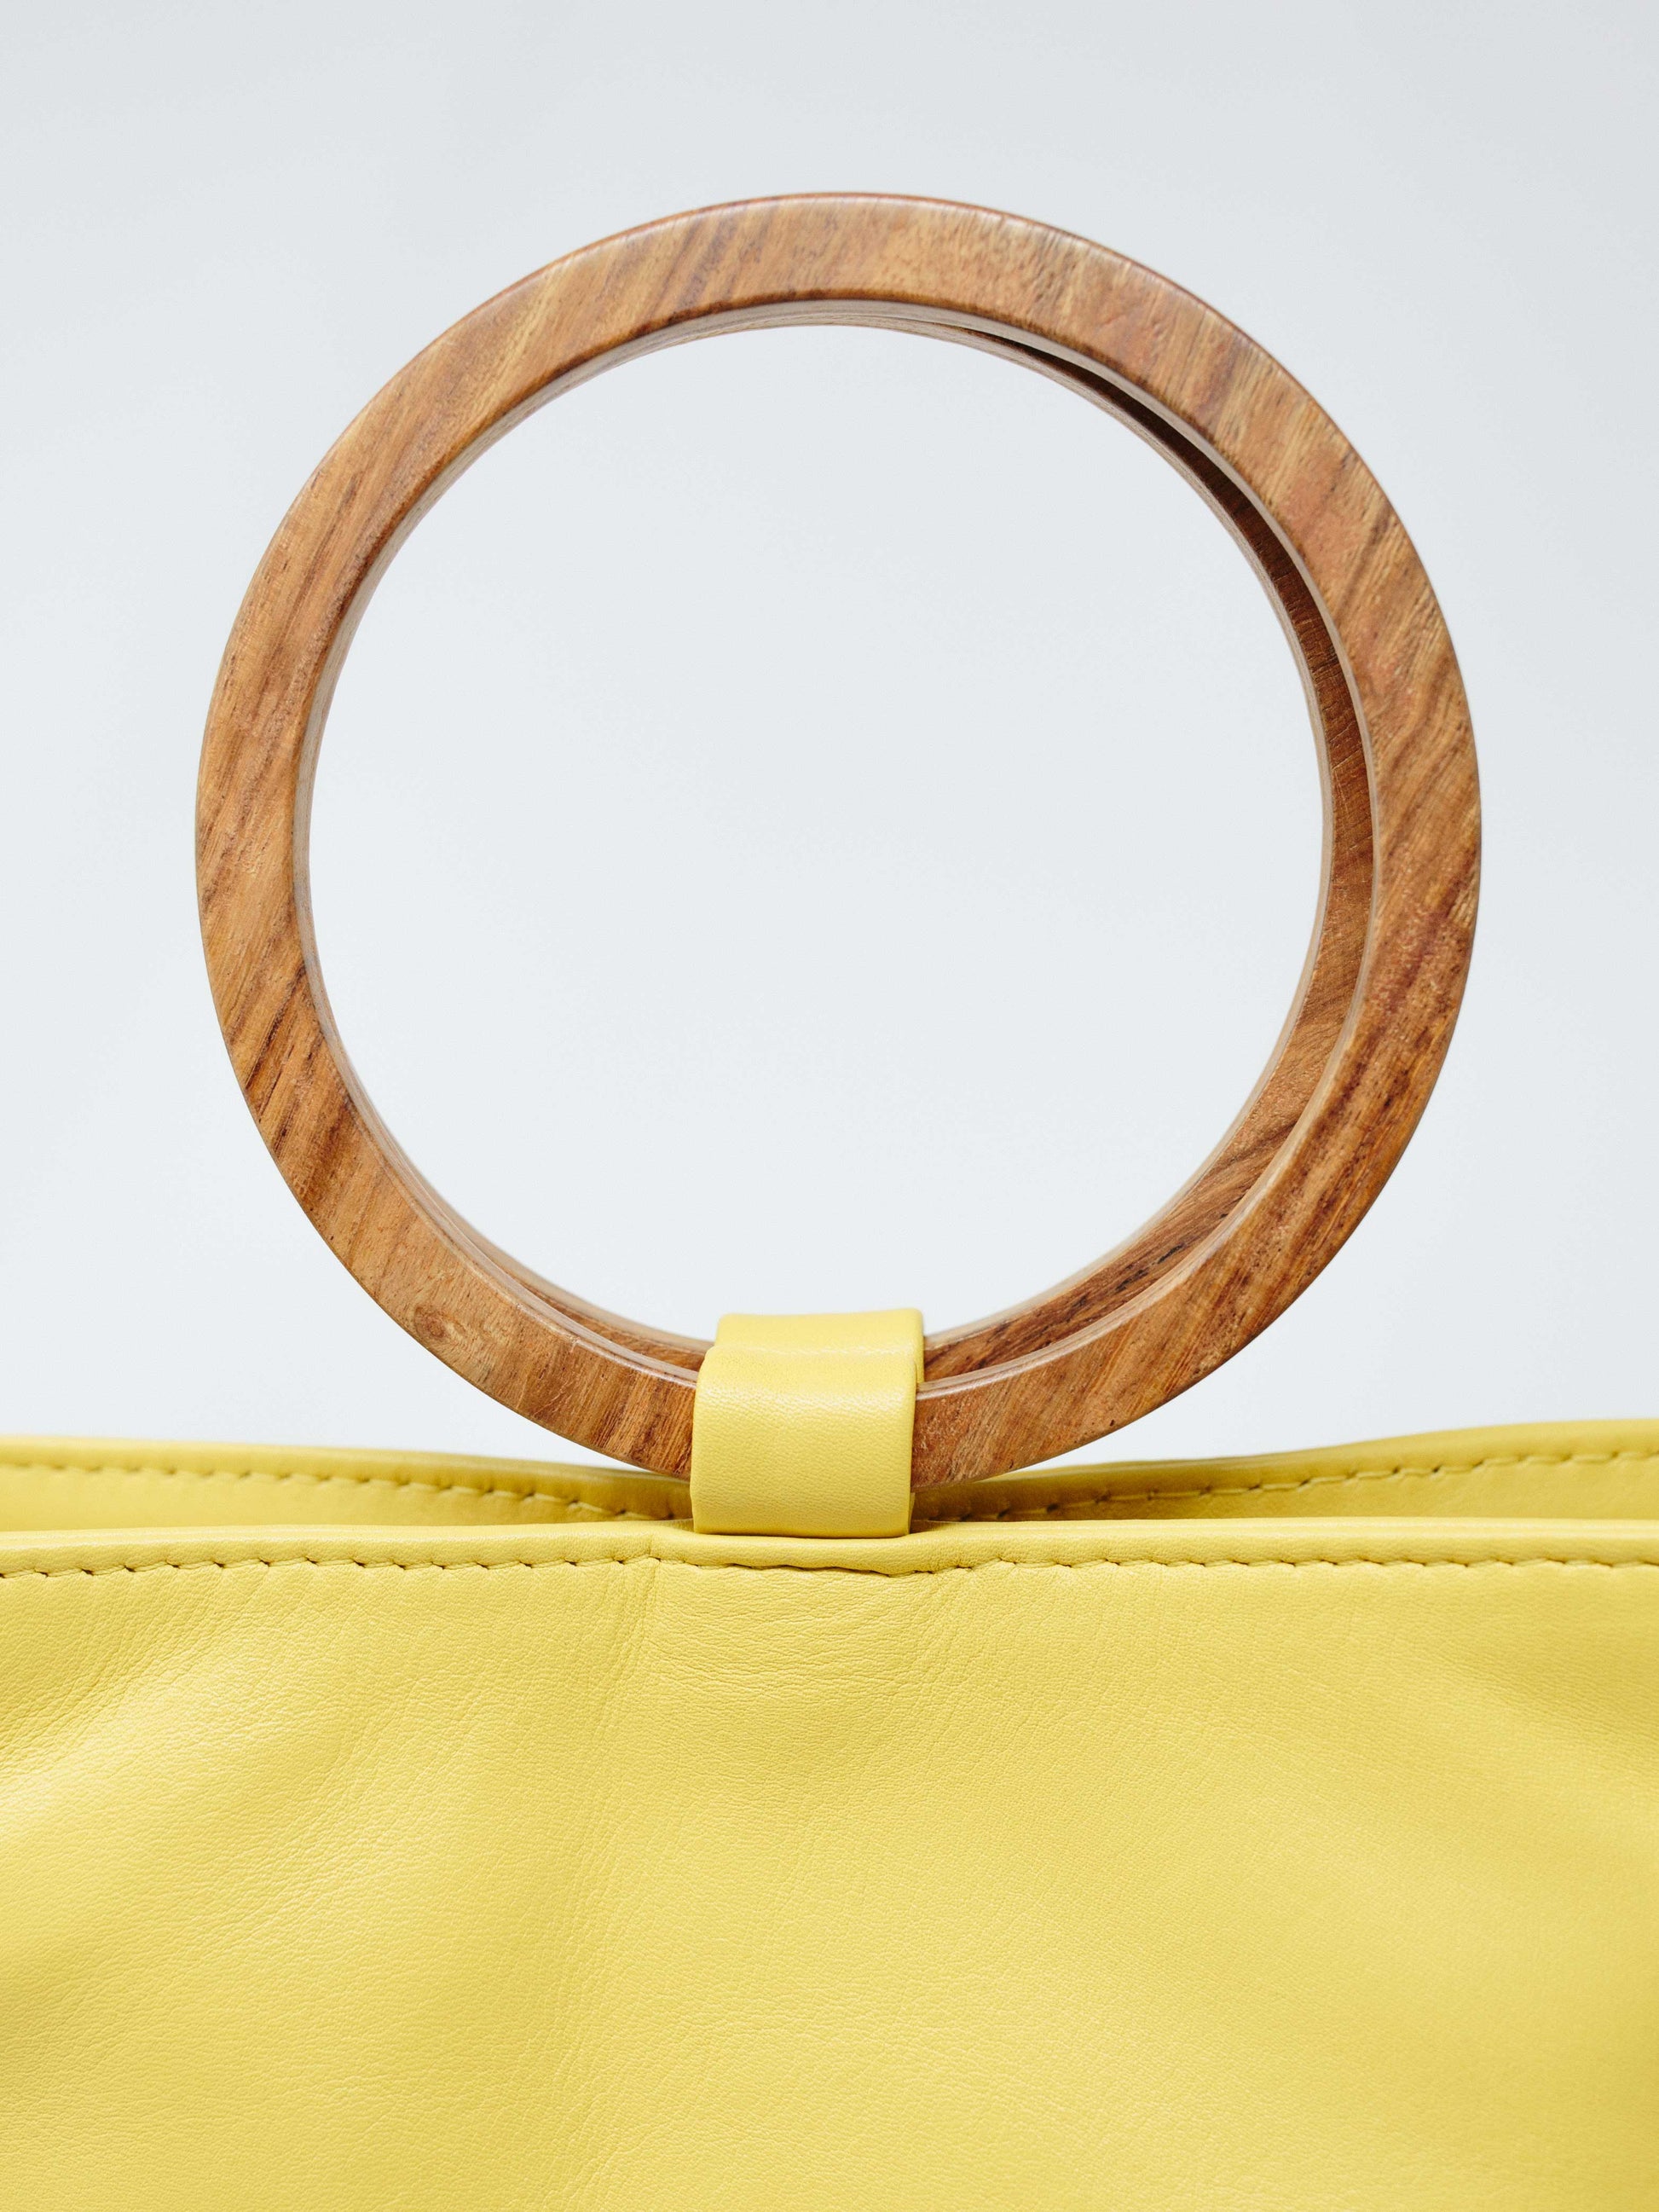 Leather Tote handbag- closeup of wood handle on wood bucket tote lemon yellow color by payton james